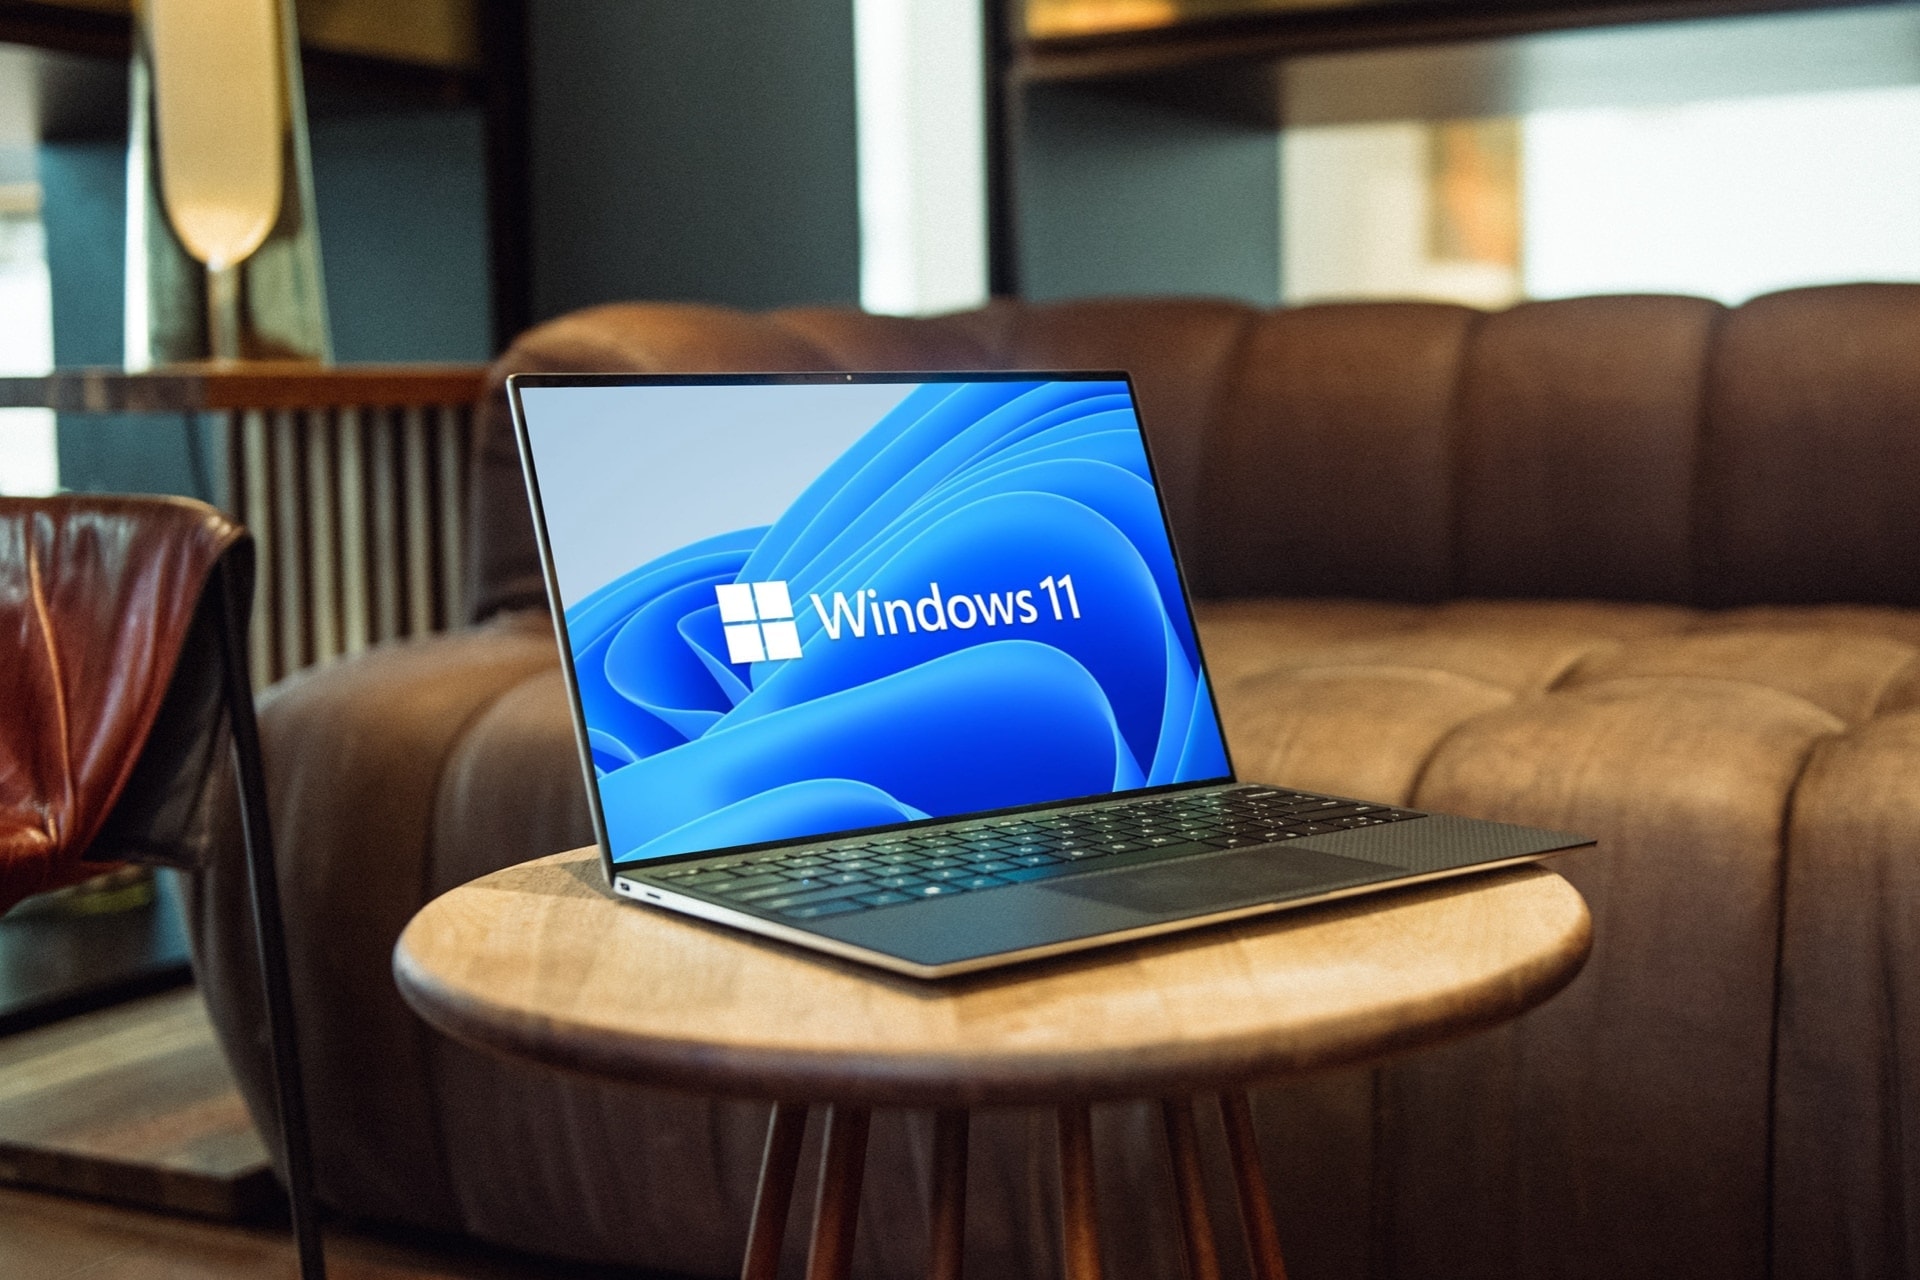 Windows 11 logo on a laptop.